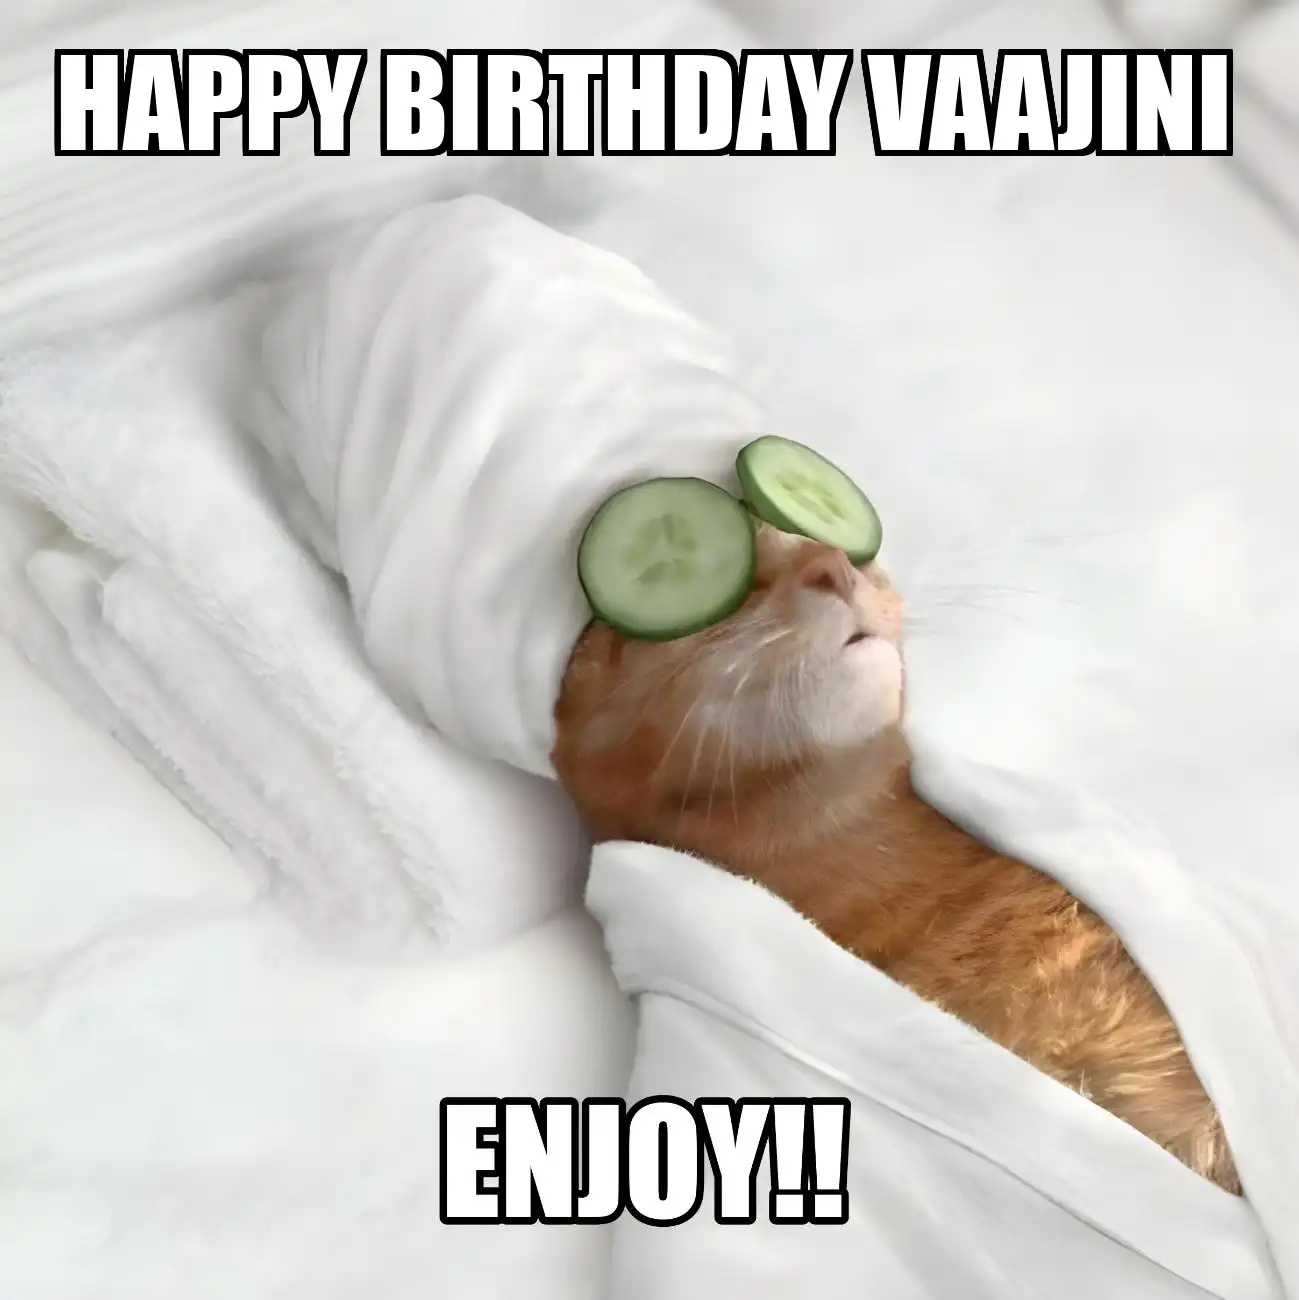 Happy Birthday Vaajini Enjoy Cat Meme